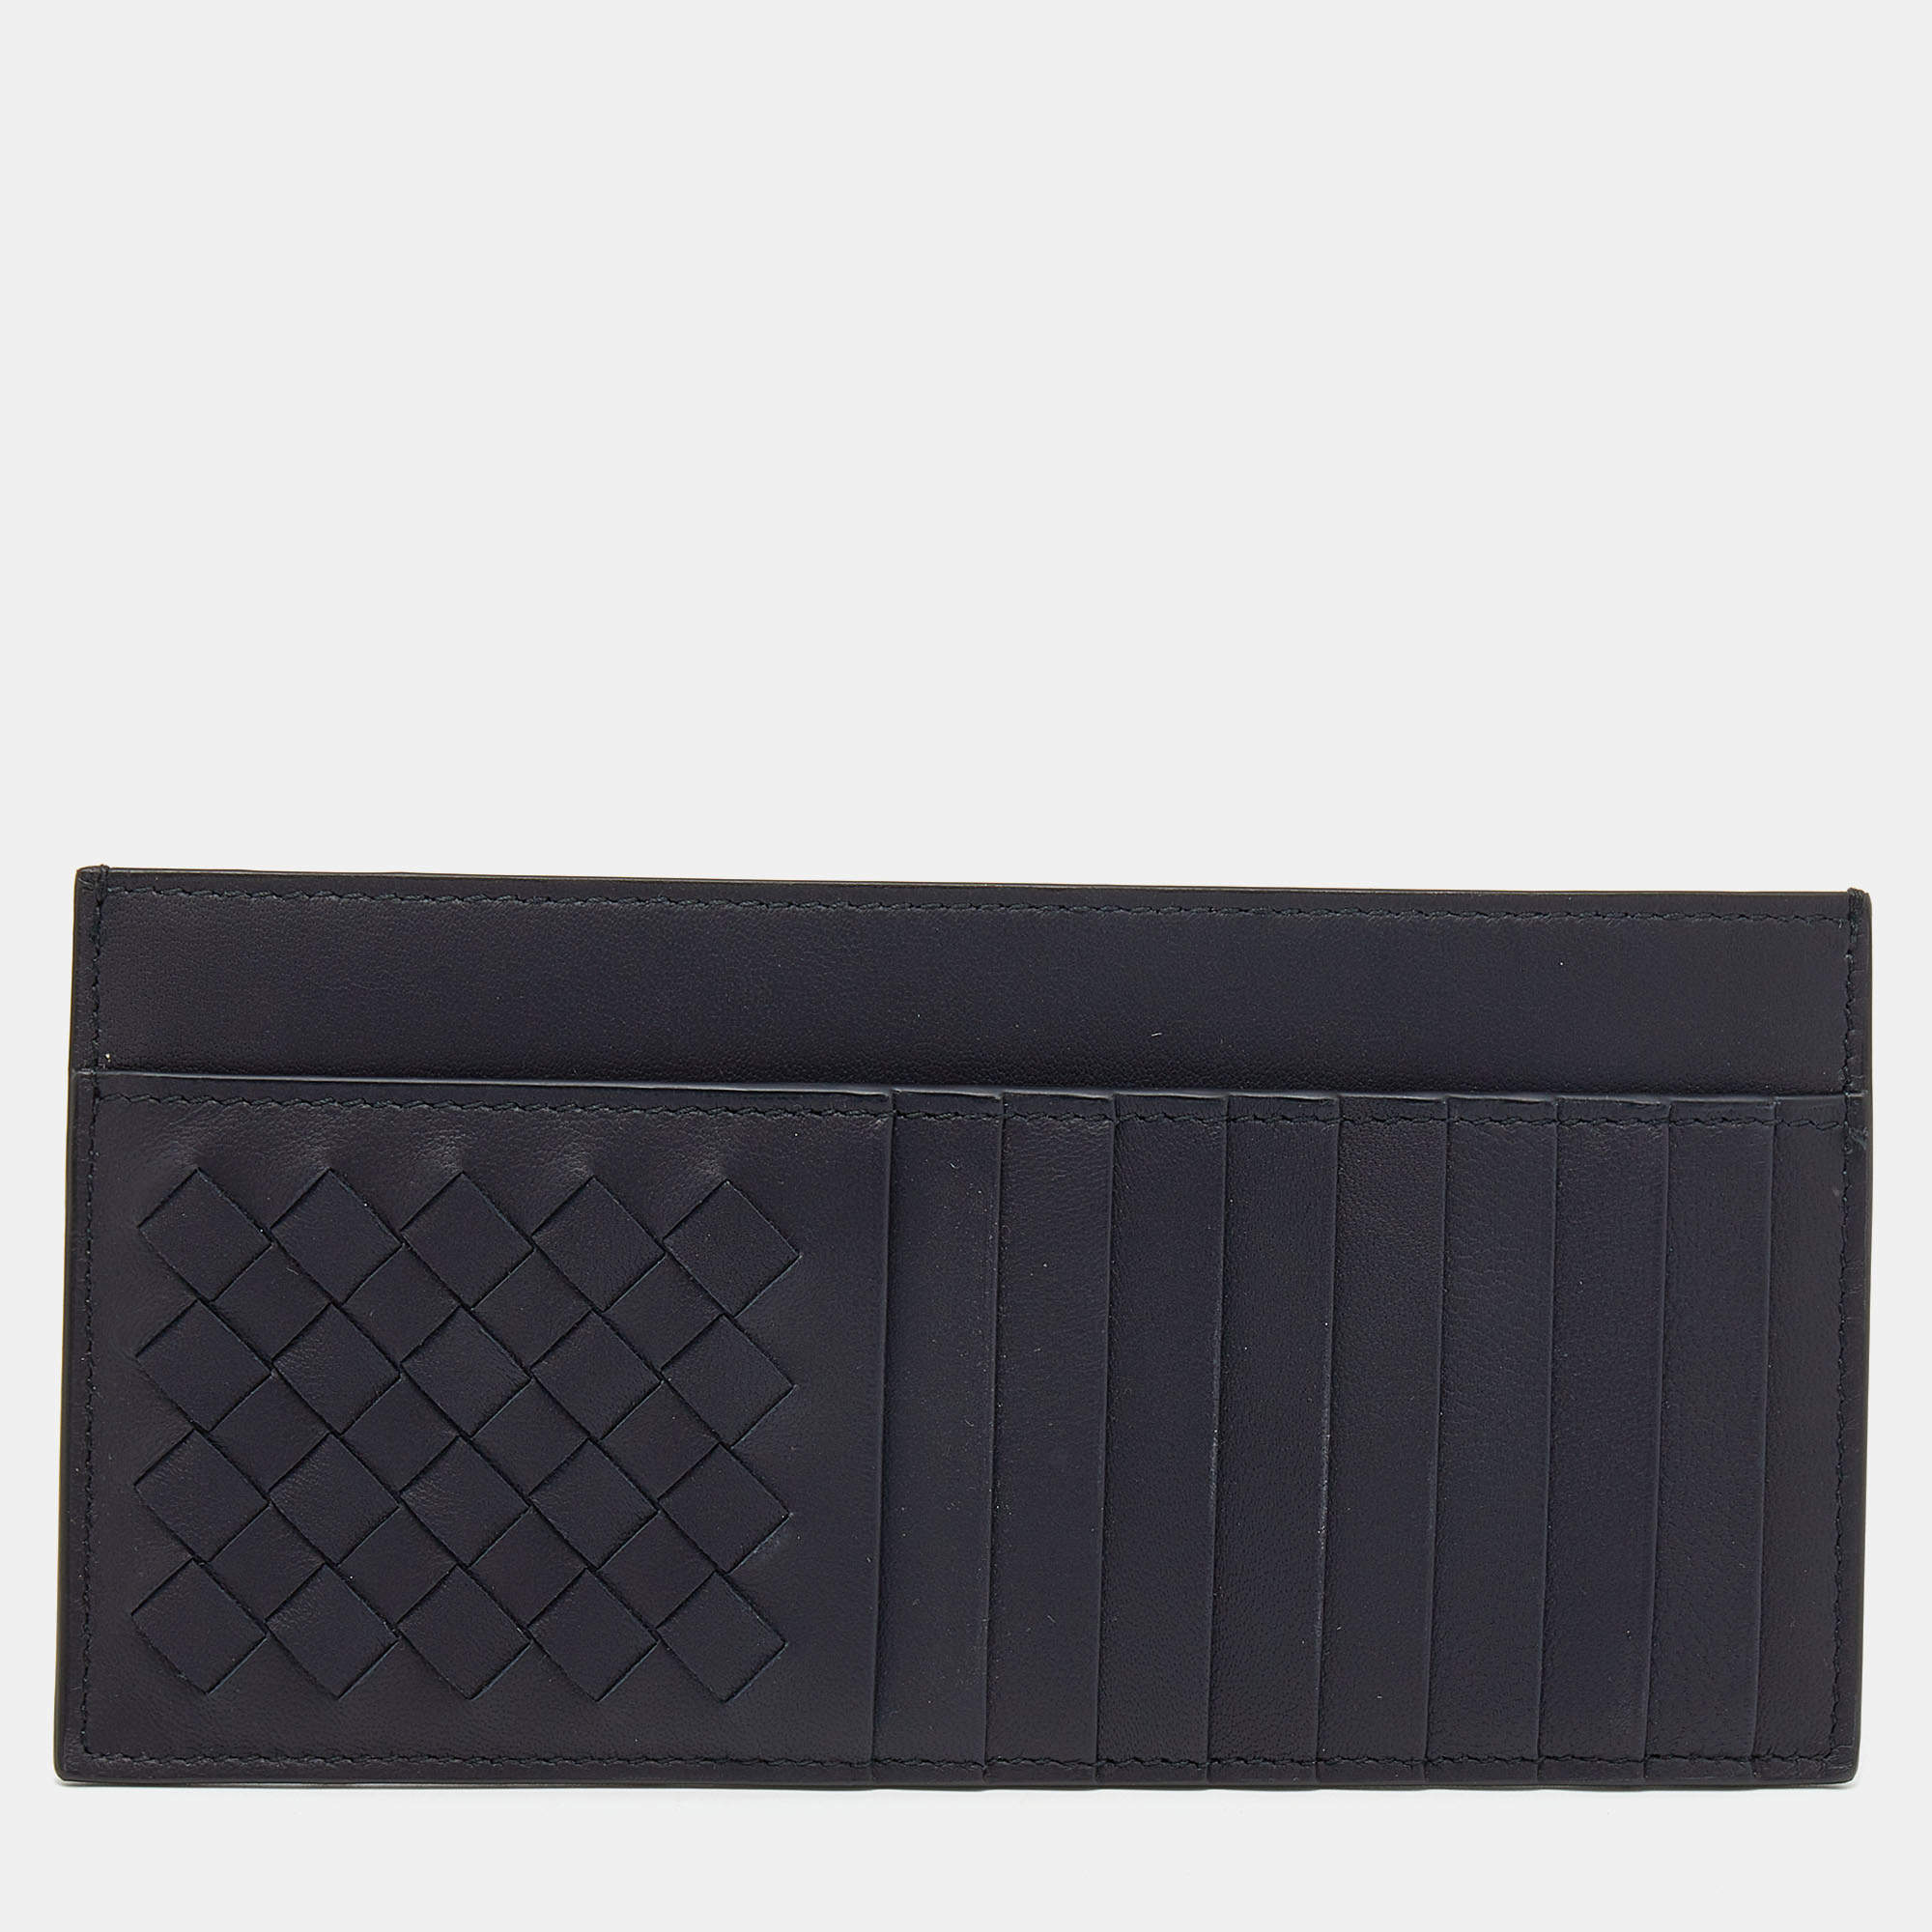 Bottega Veneta Black Leather Intrecciato Cheque Wallet 